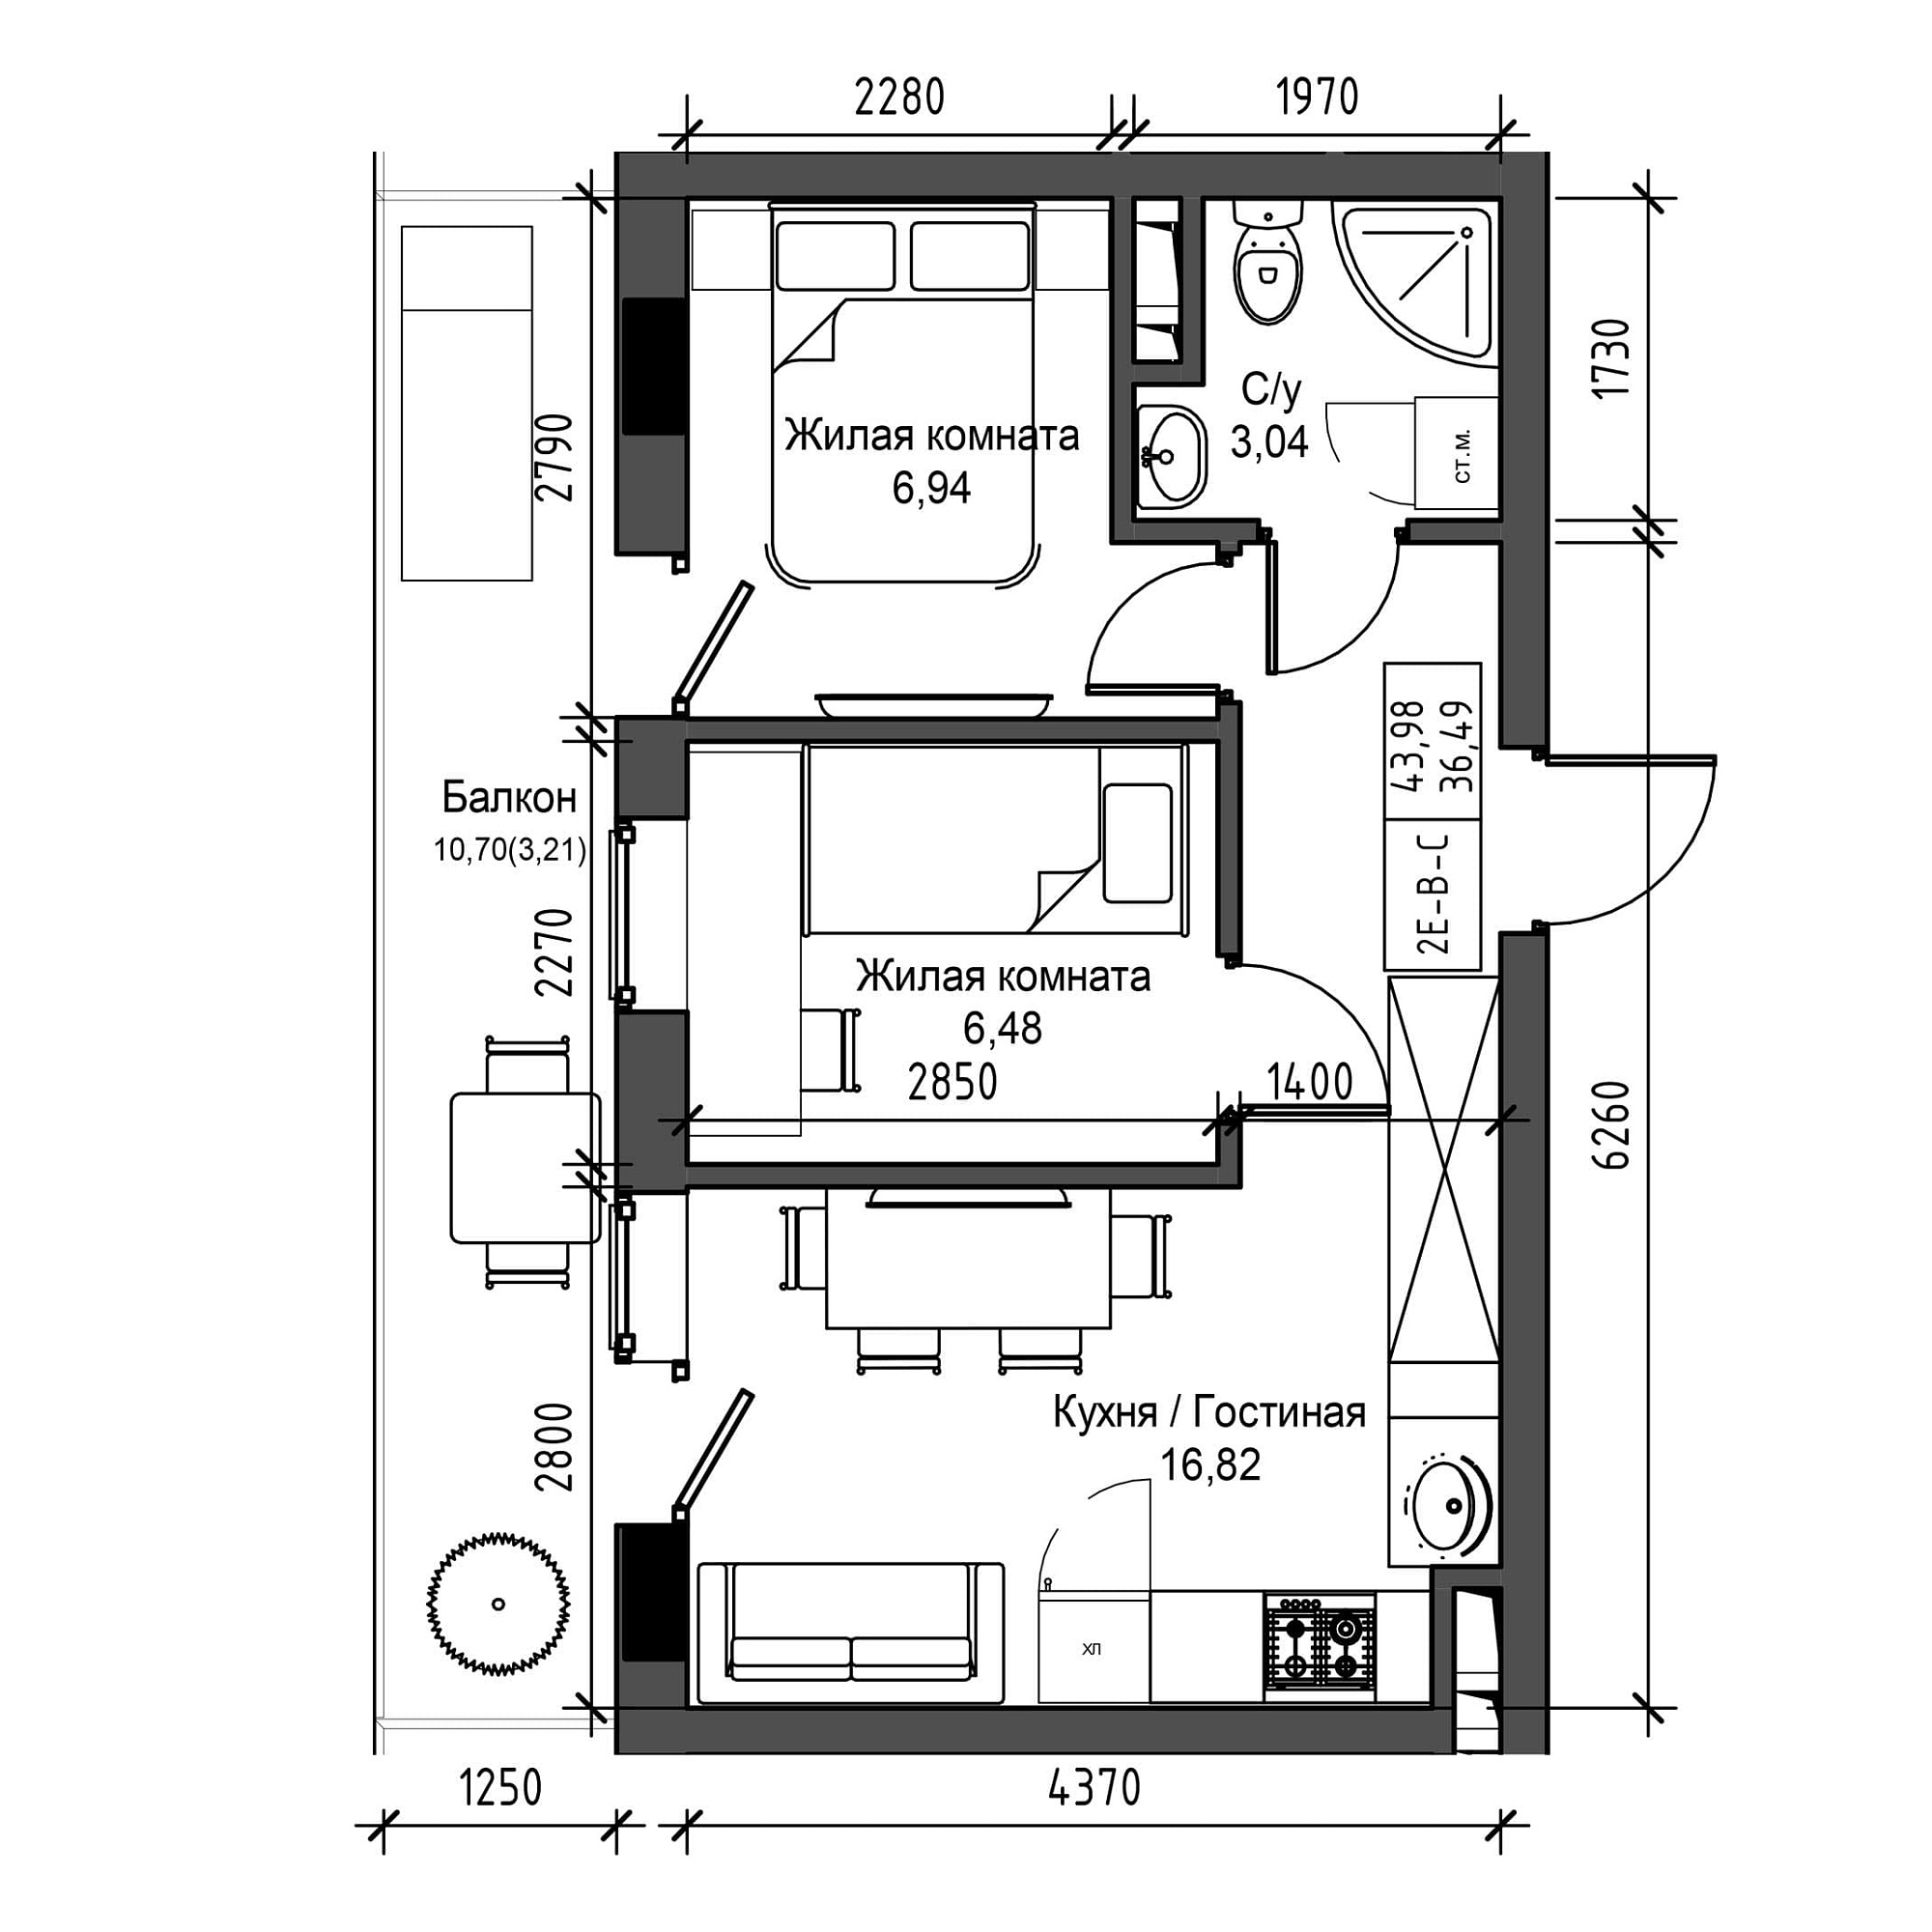 Планування 2-к квартира площею 36.49м2, UM-001-09/0017.